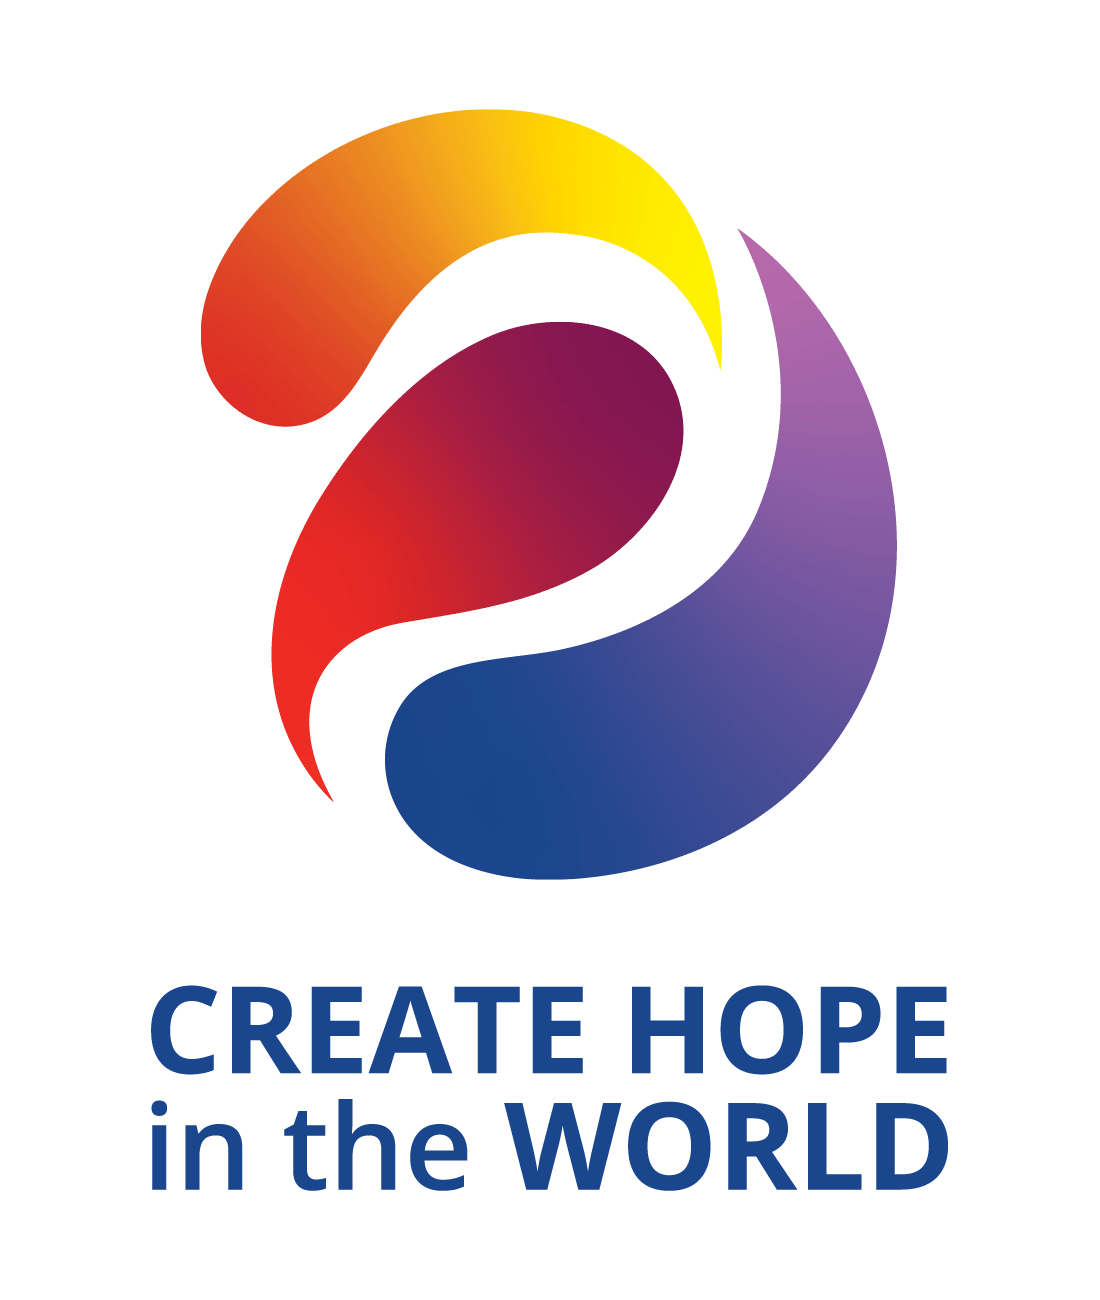 CREATE HOPE in the WORLD